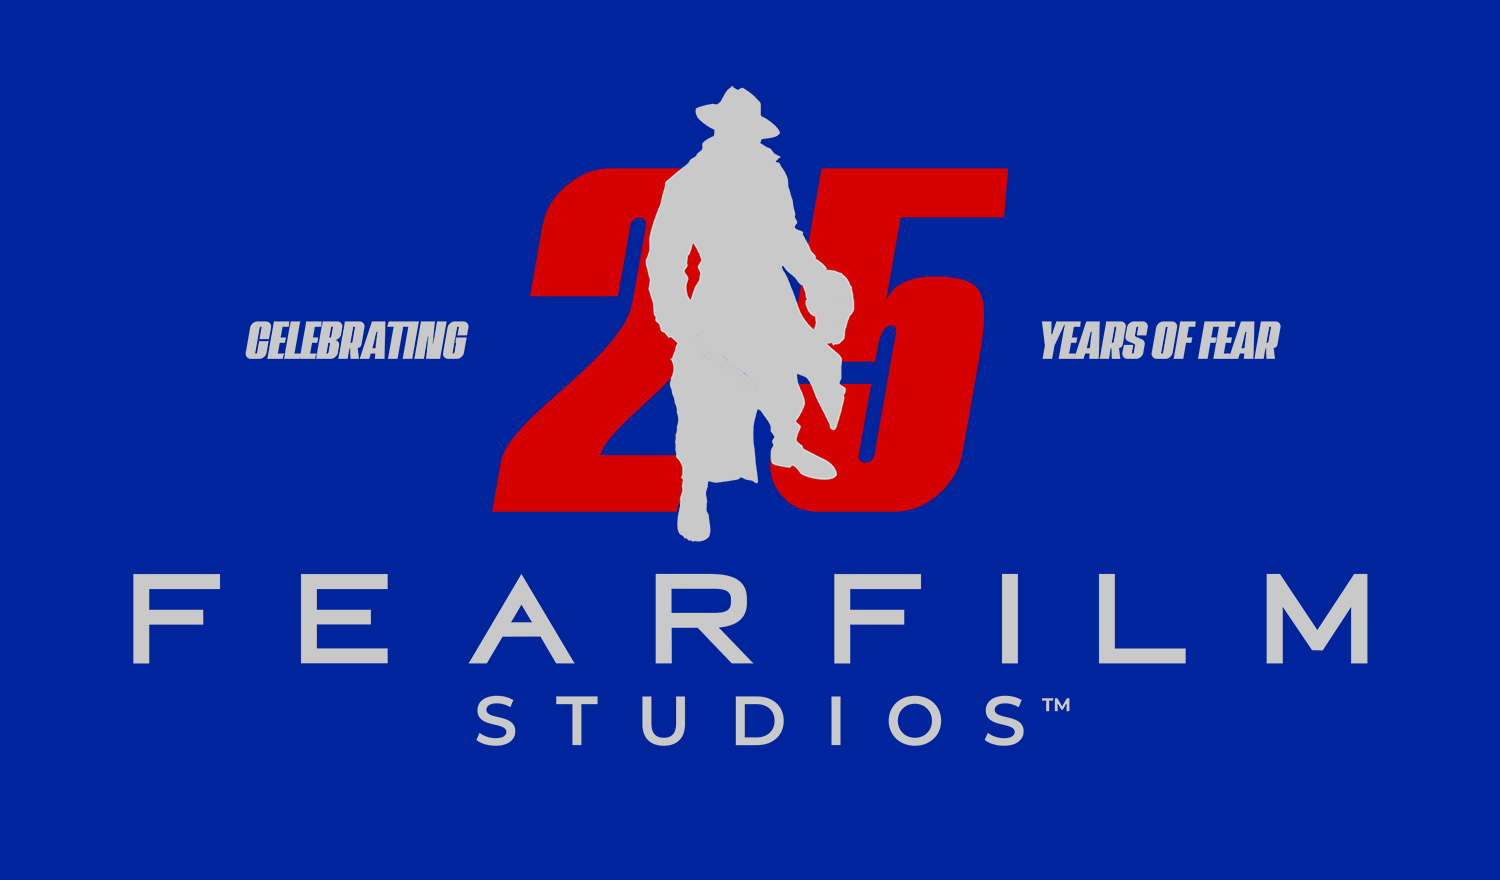 FEAR FILM Studios 25th anniversary logo